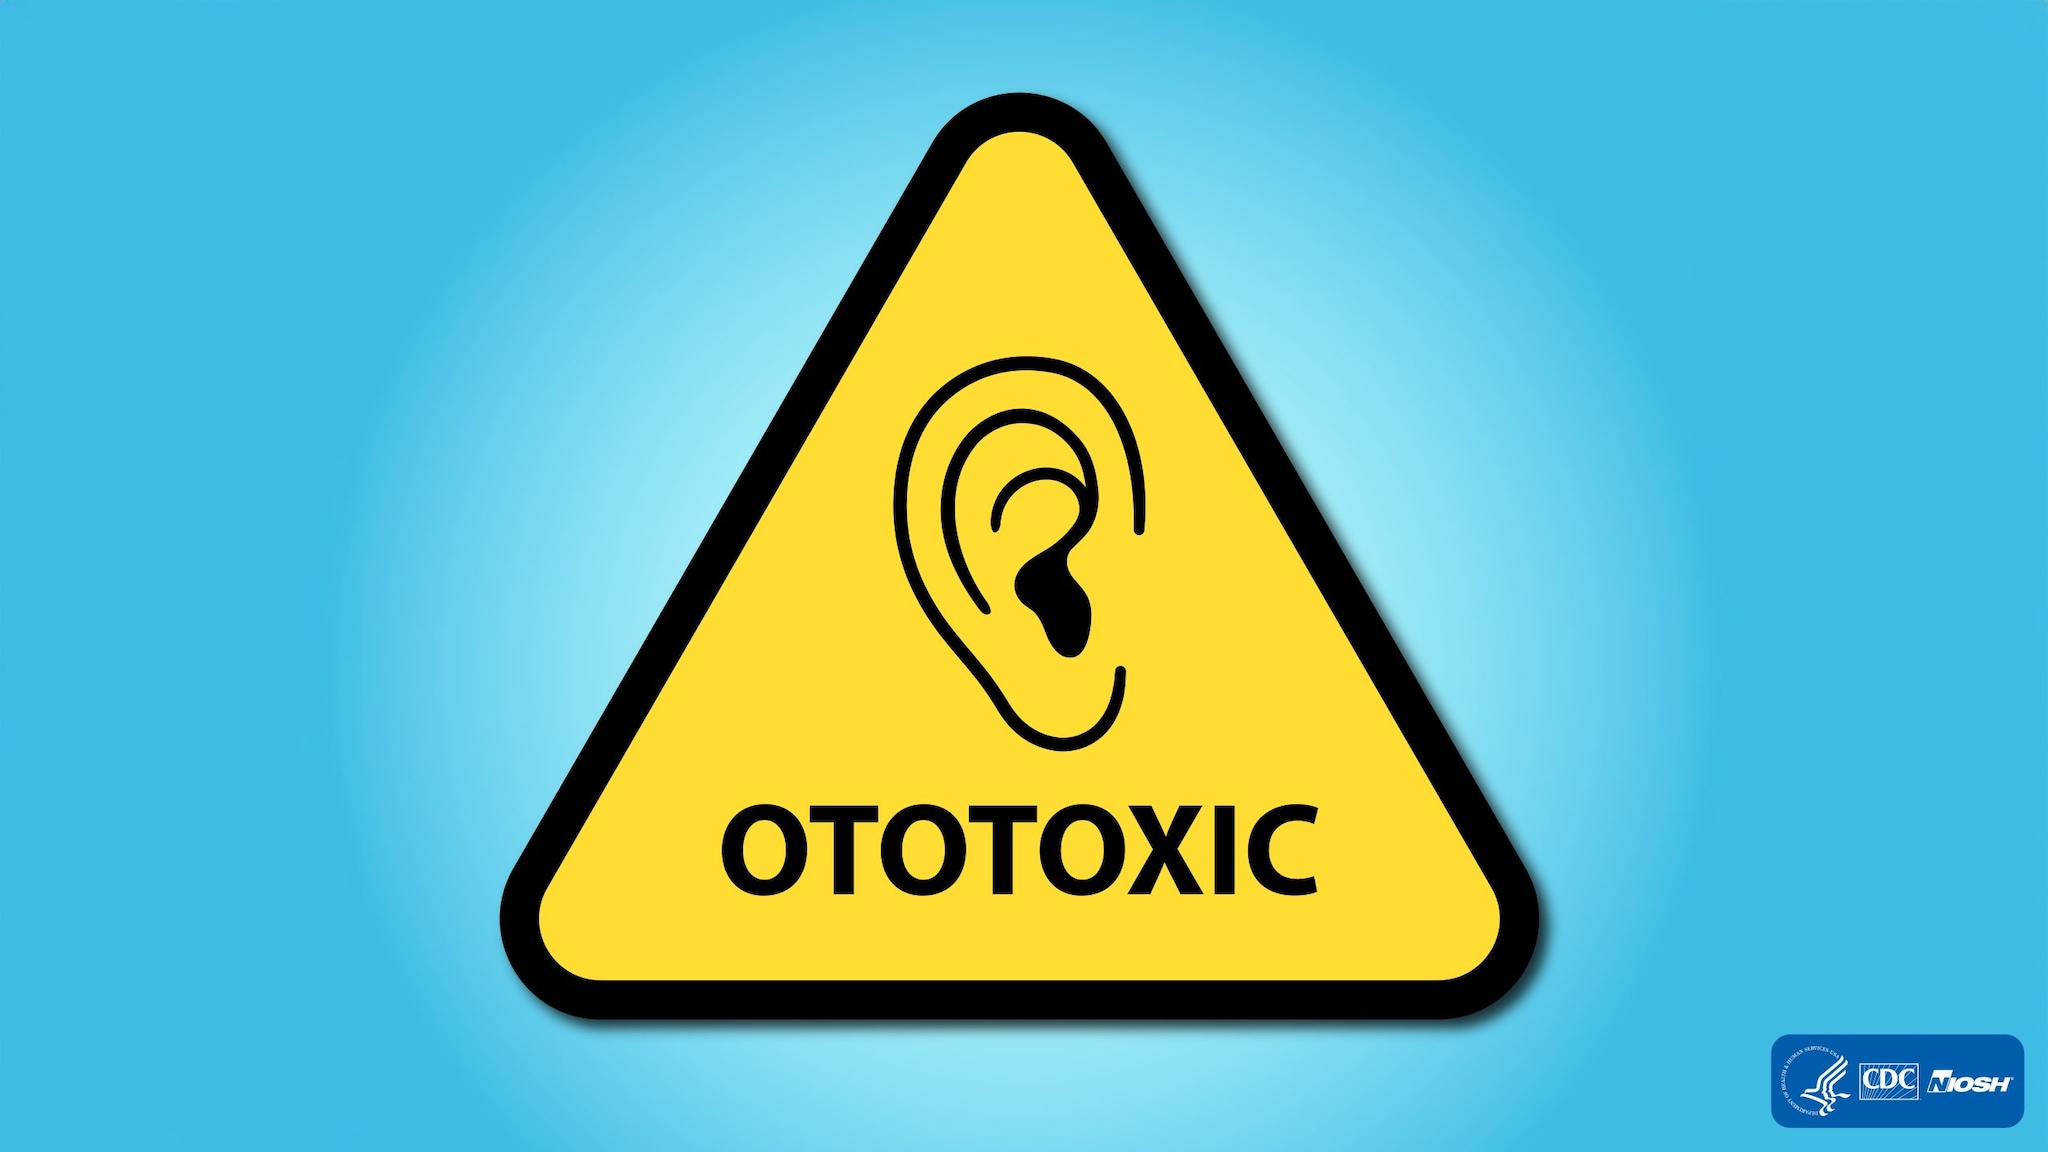 Warning symbol with ear icon that says ototoxic